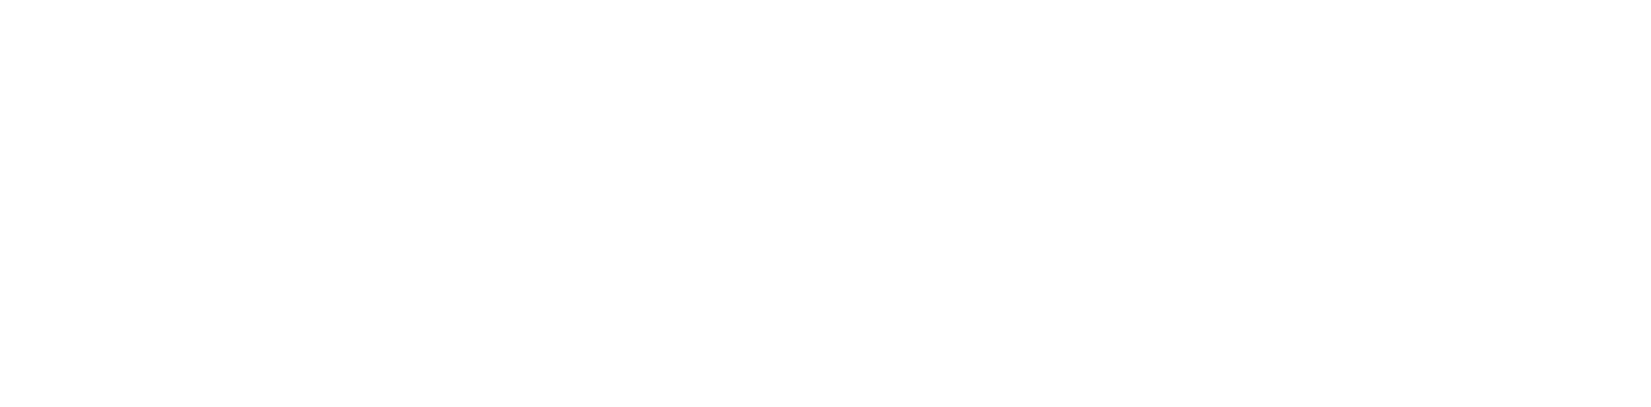 Dainty productions, Inc.